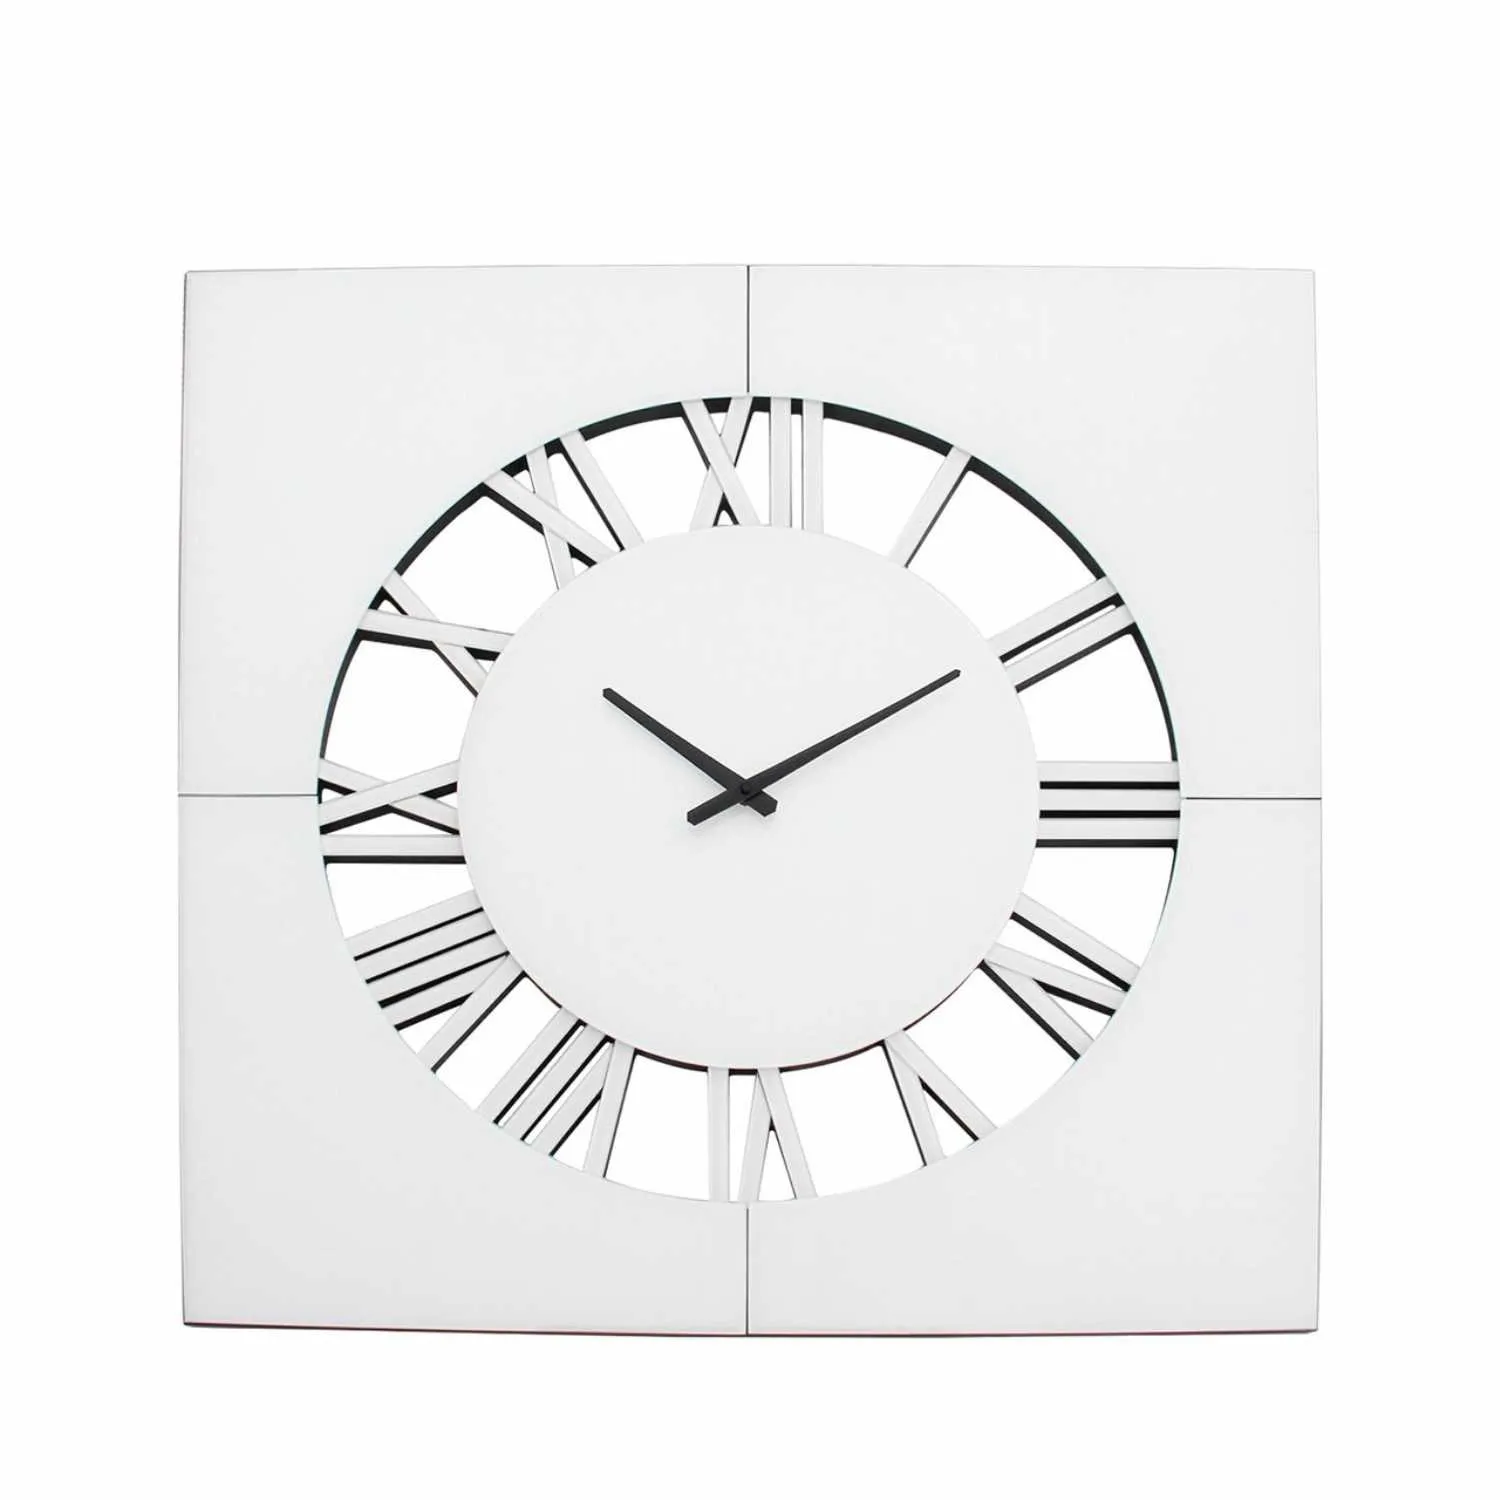 80cm White Mirror Wall Clock